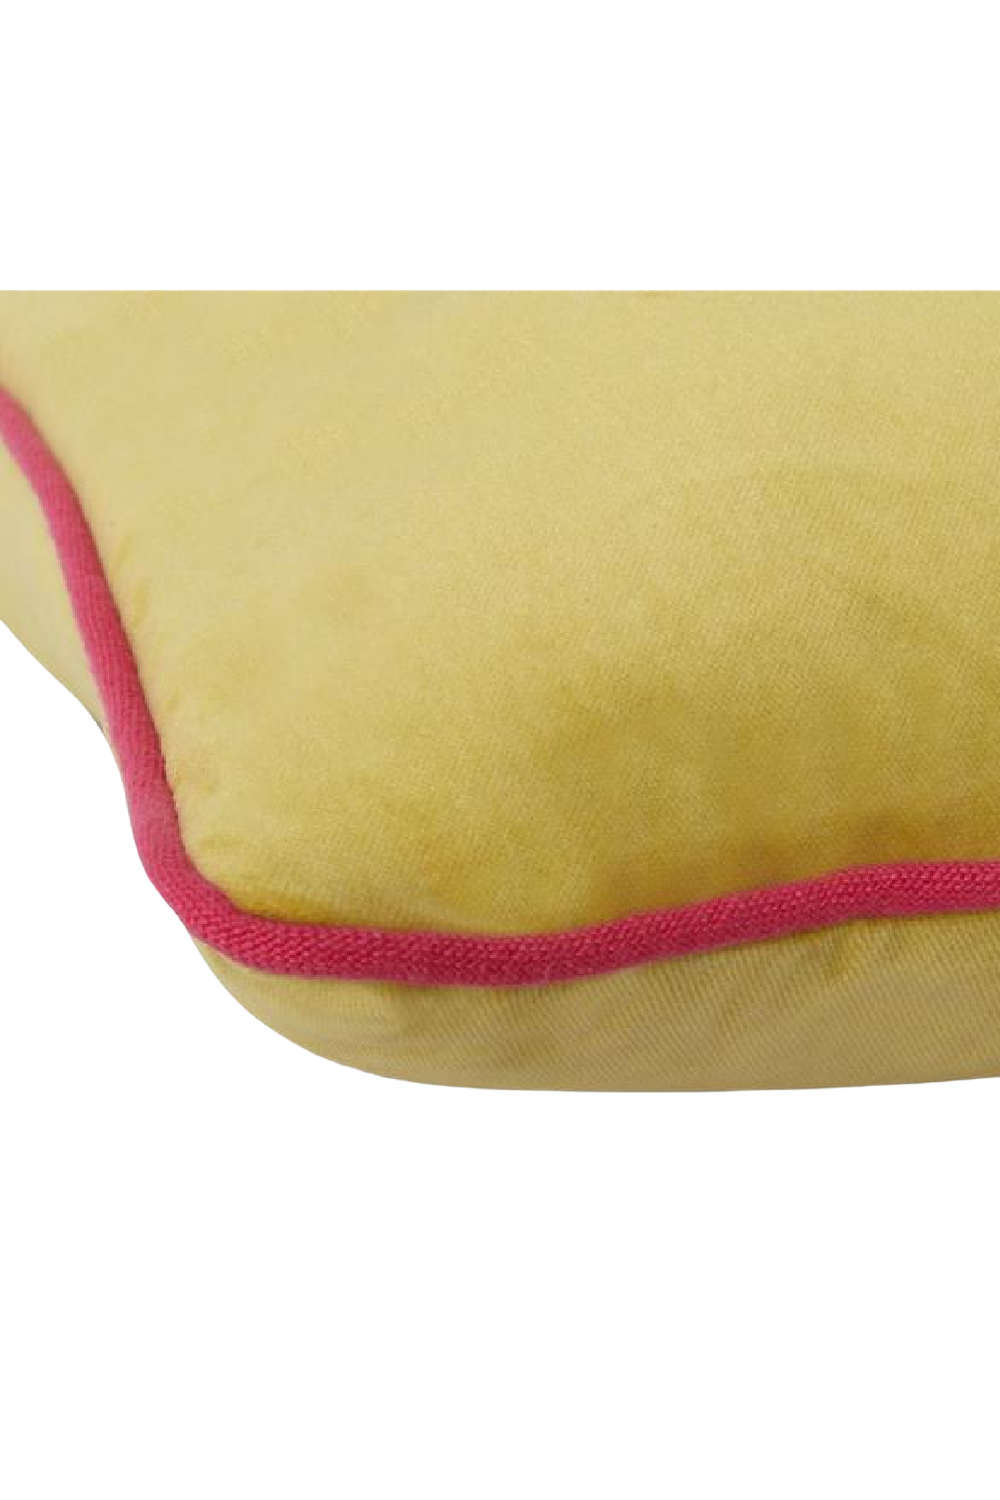 Yellow Velvet Cushion with Pink Piping | Andrew Martin Pelham | OROA